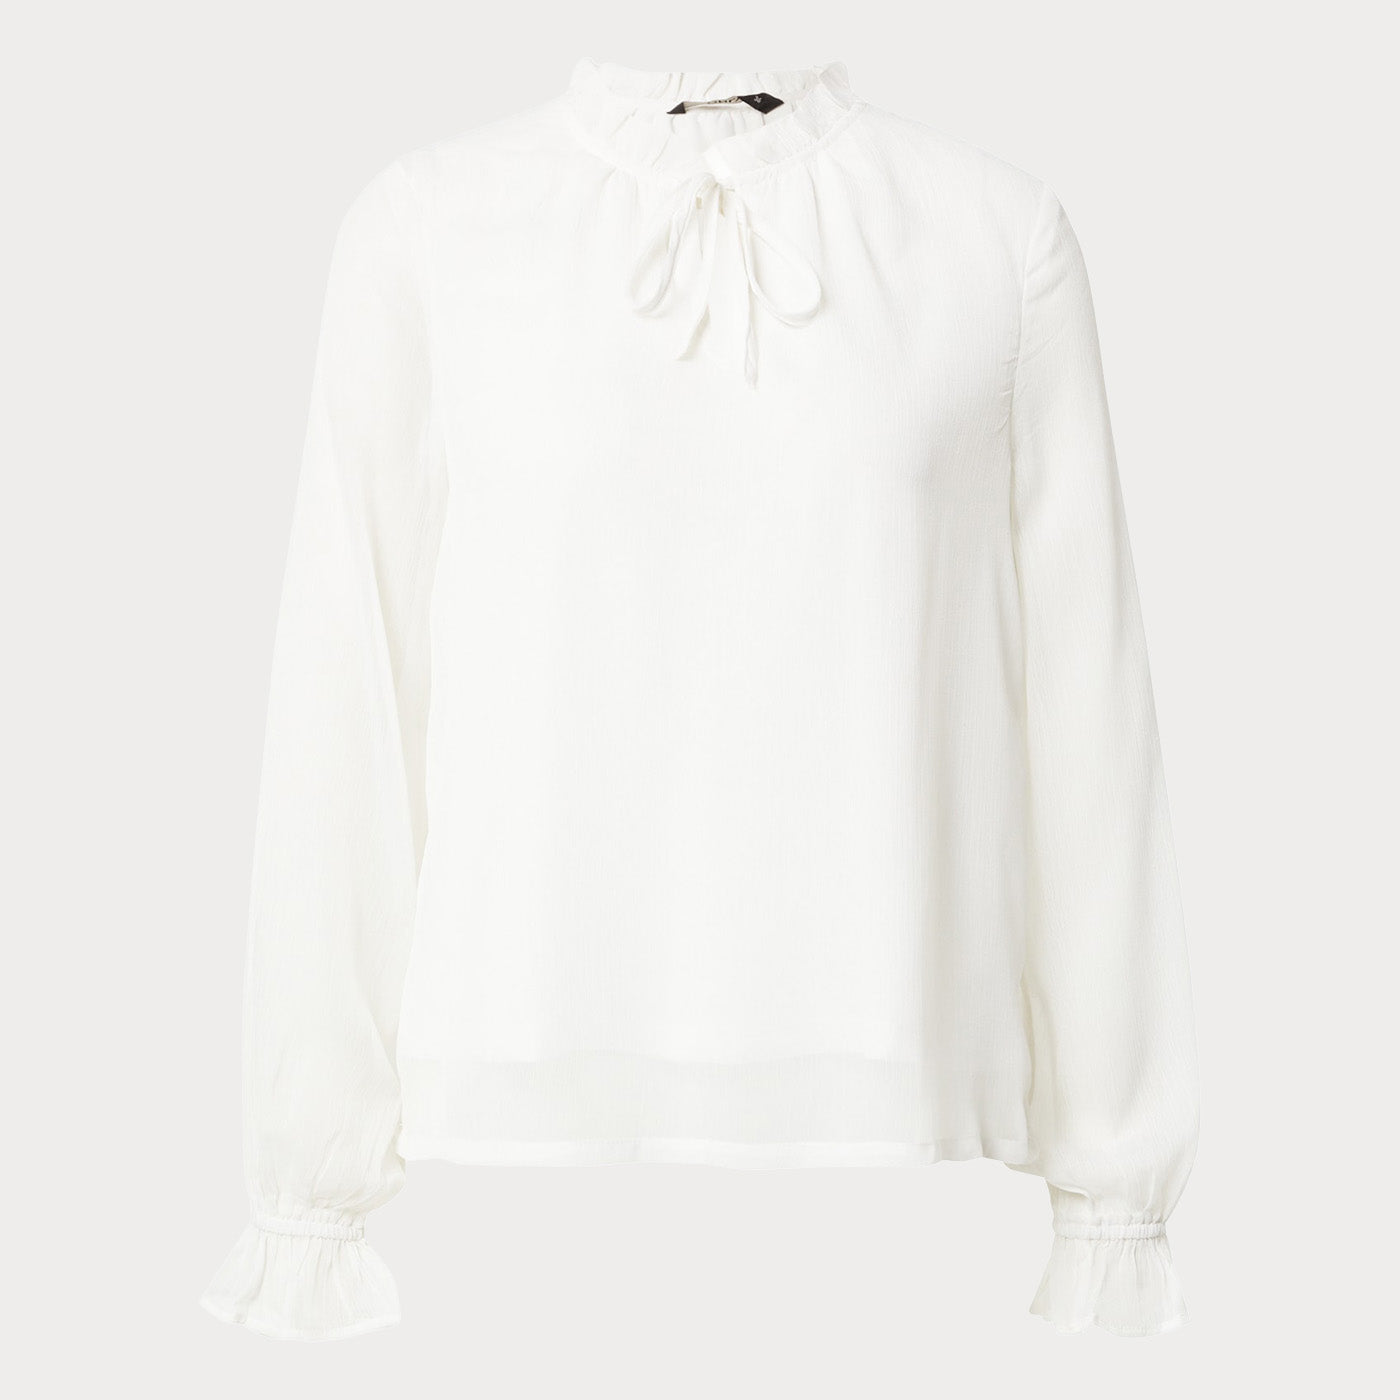  Дамска бяла елегантна блуза ONLY размер 38.